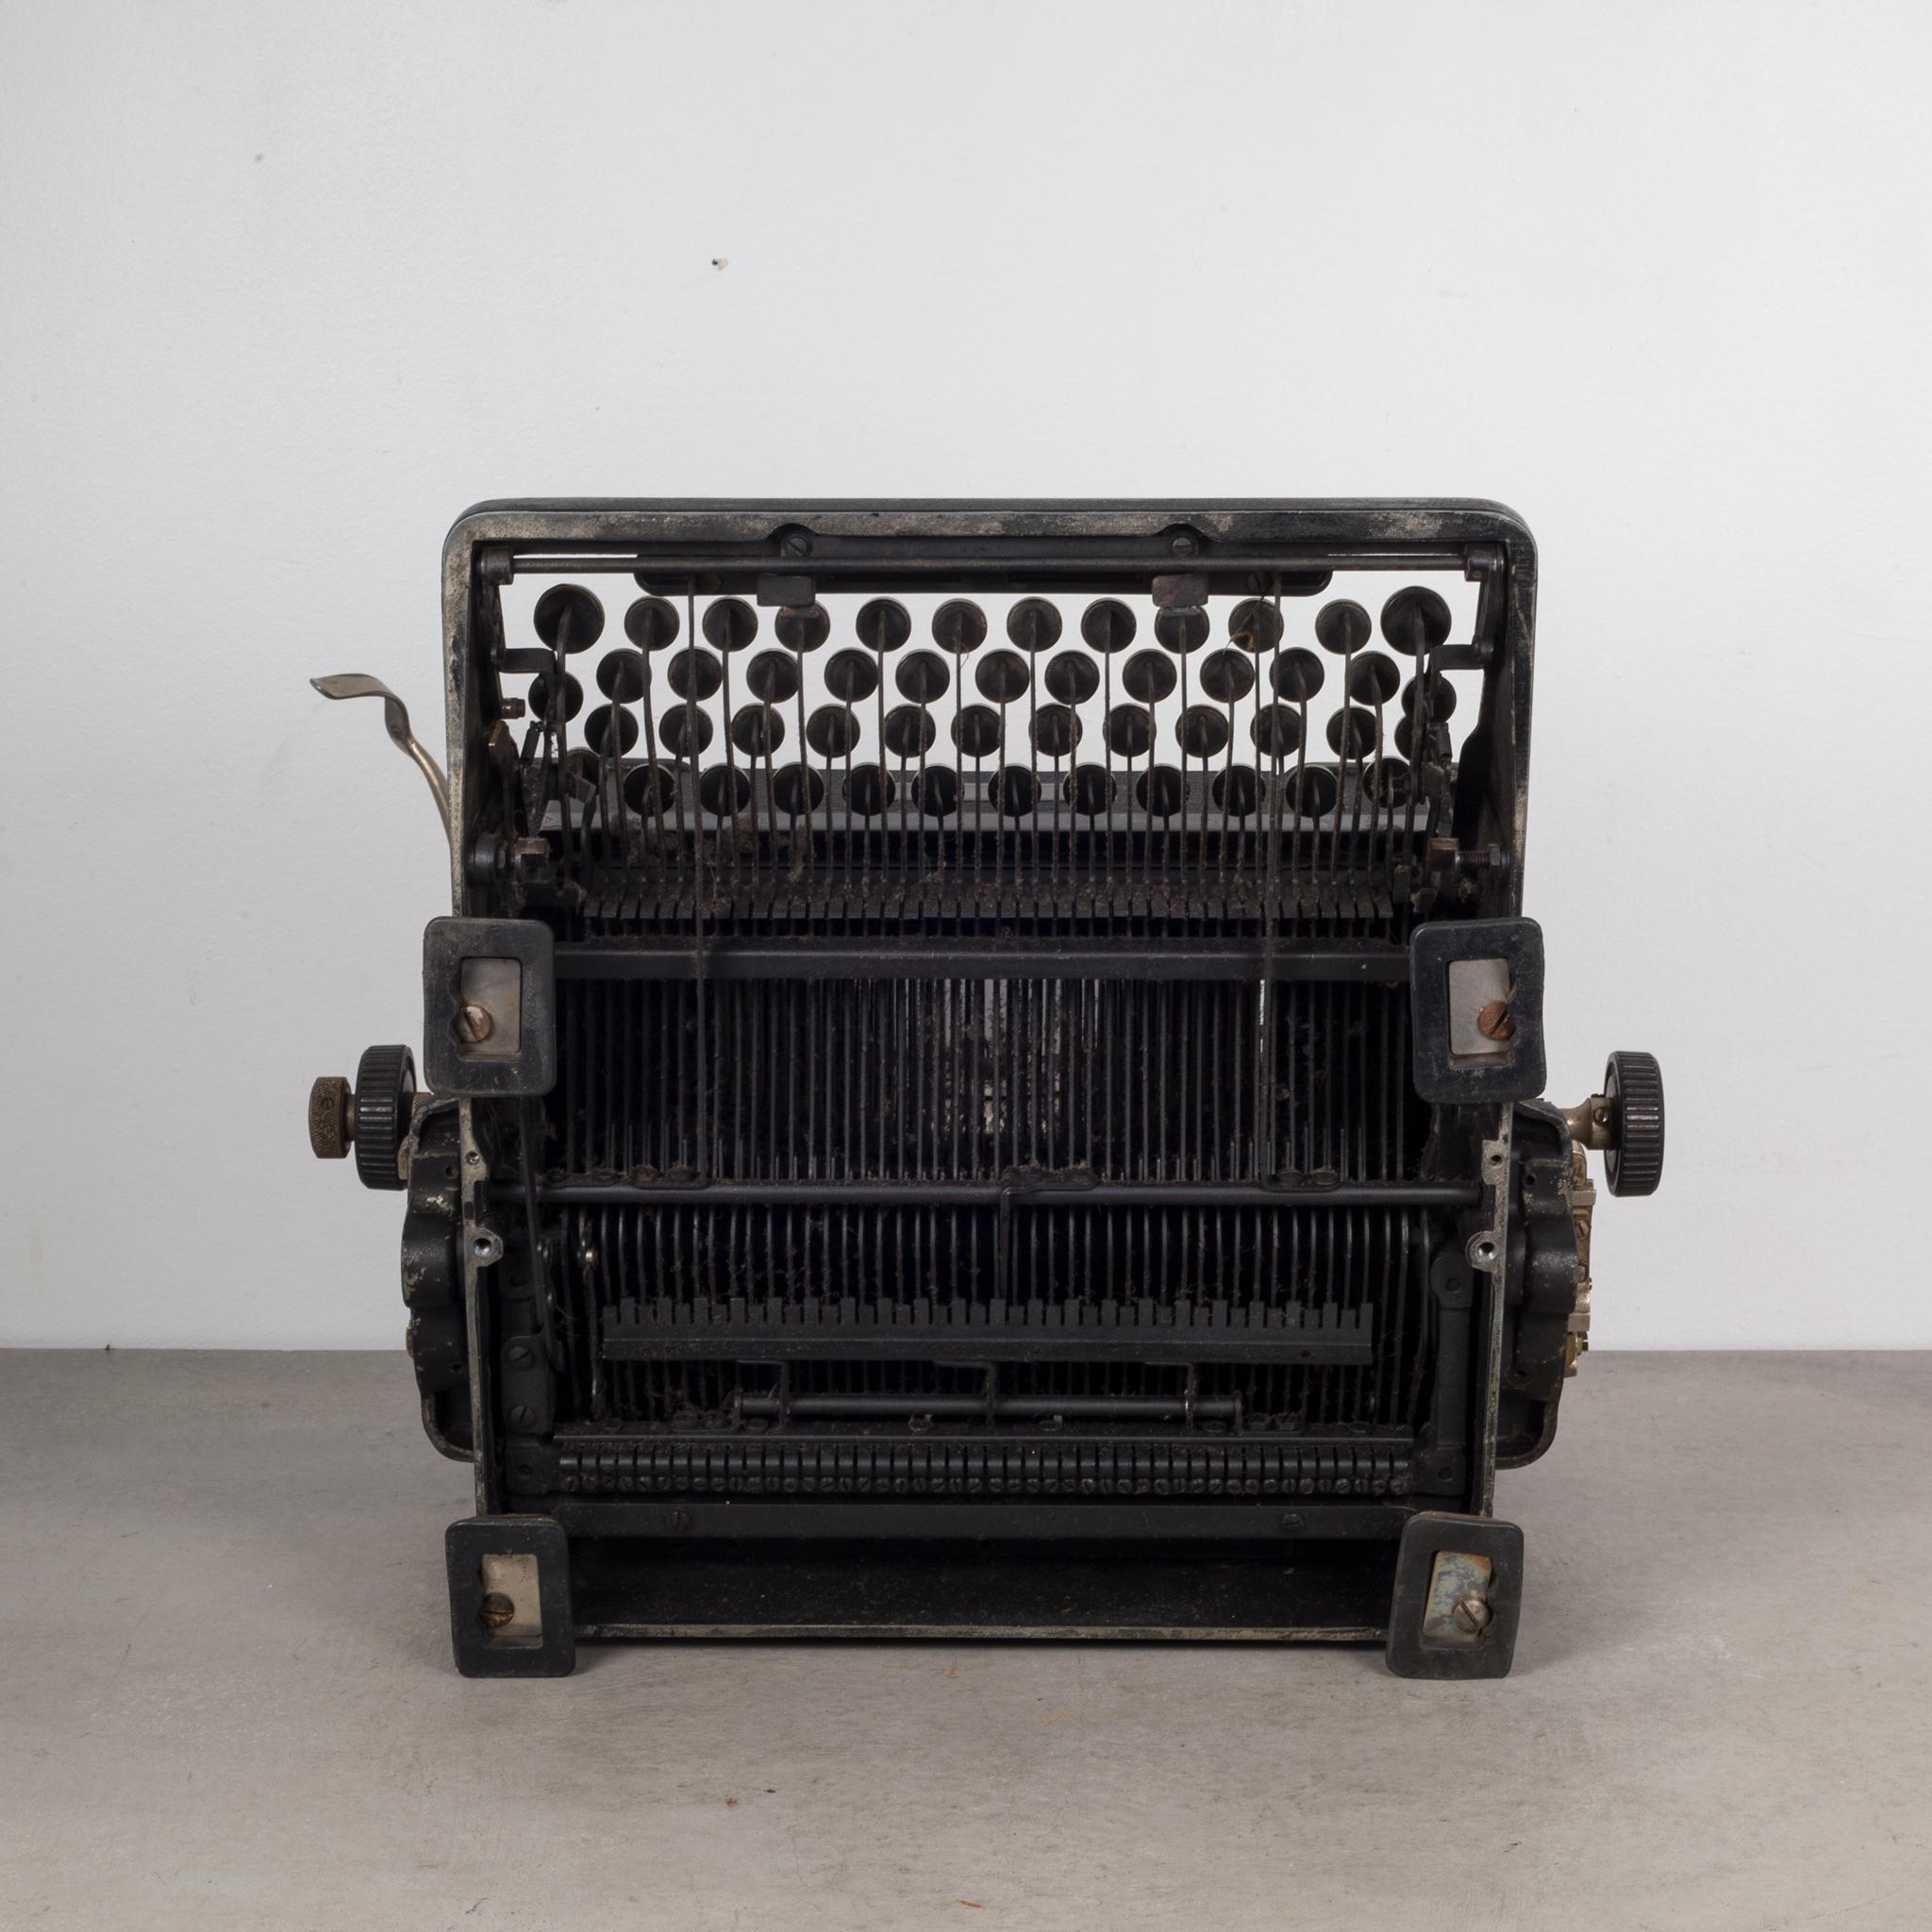 Art Deco Antique Woodstock Typewriter #5, circa 1933